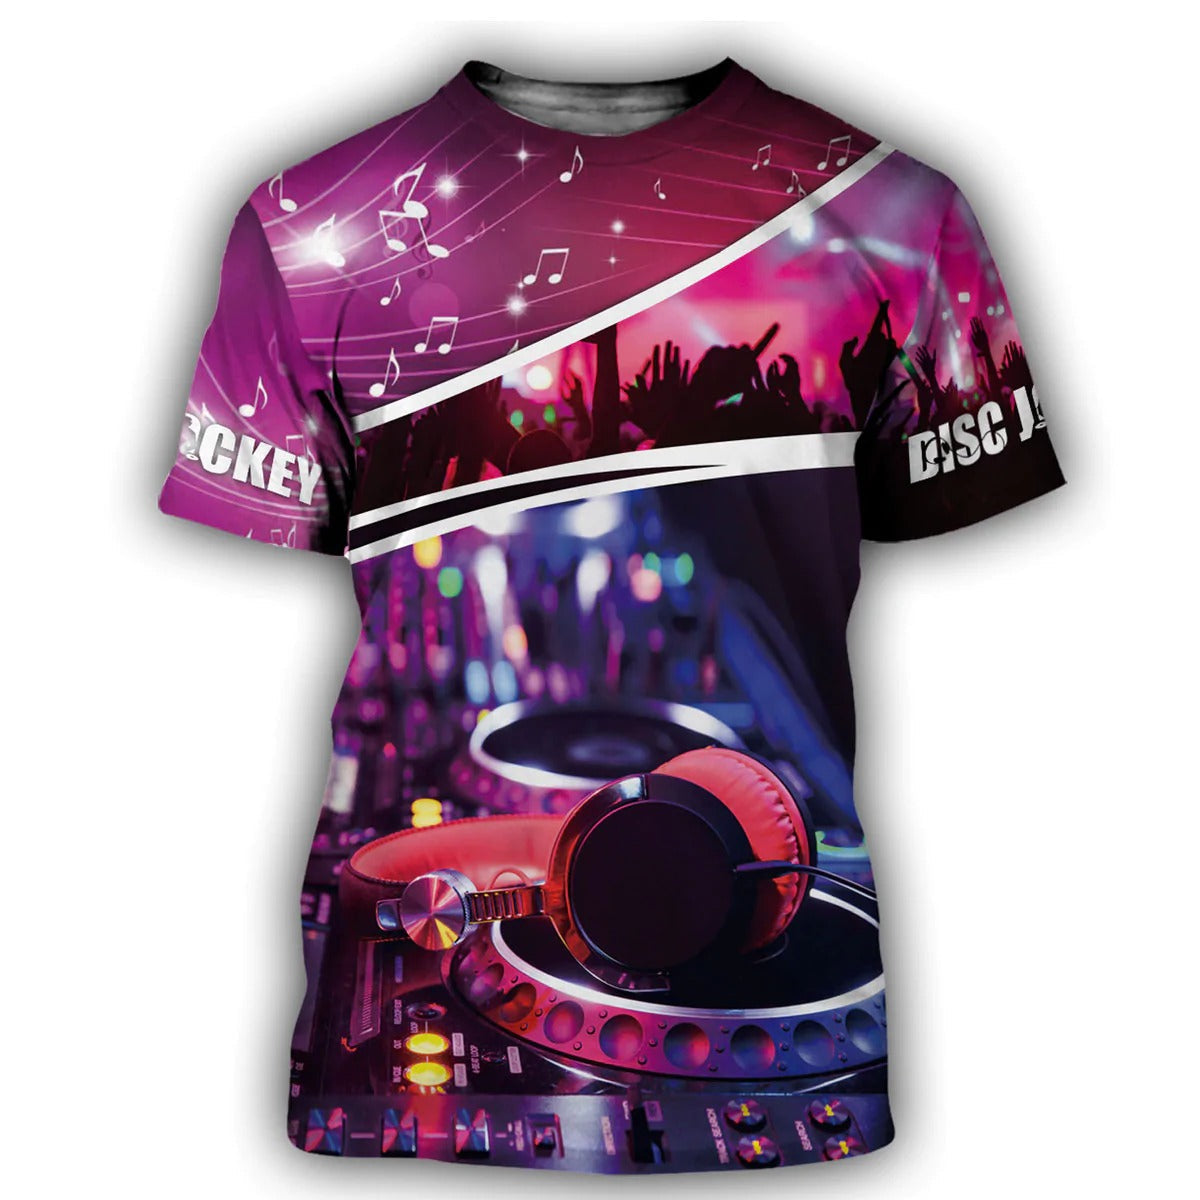 3D Print Colorful DJ Shirt And Hoodie/ Disc Jockey Gift/ Best Gift For DJ Boyfriend